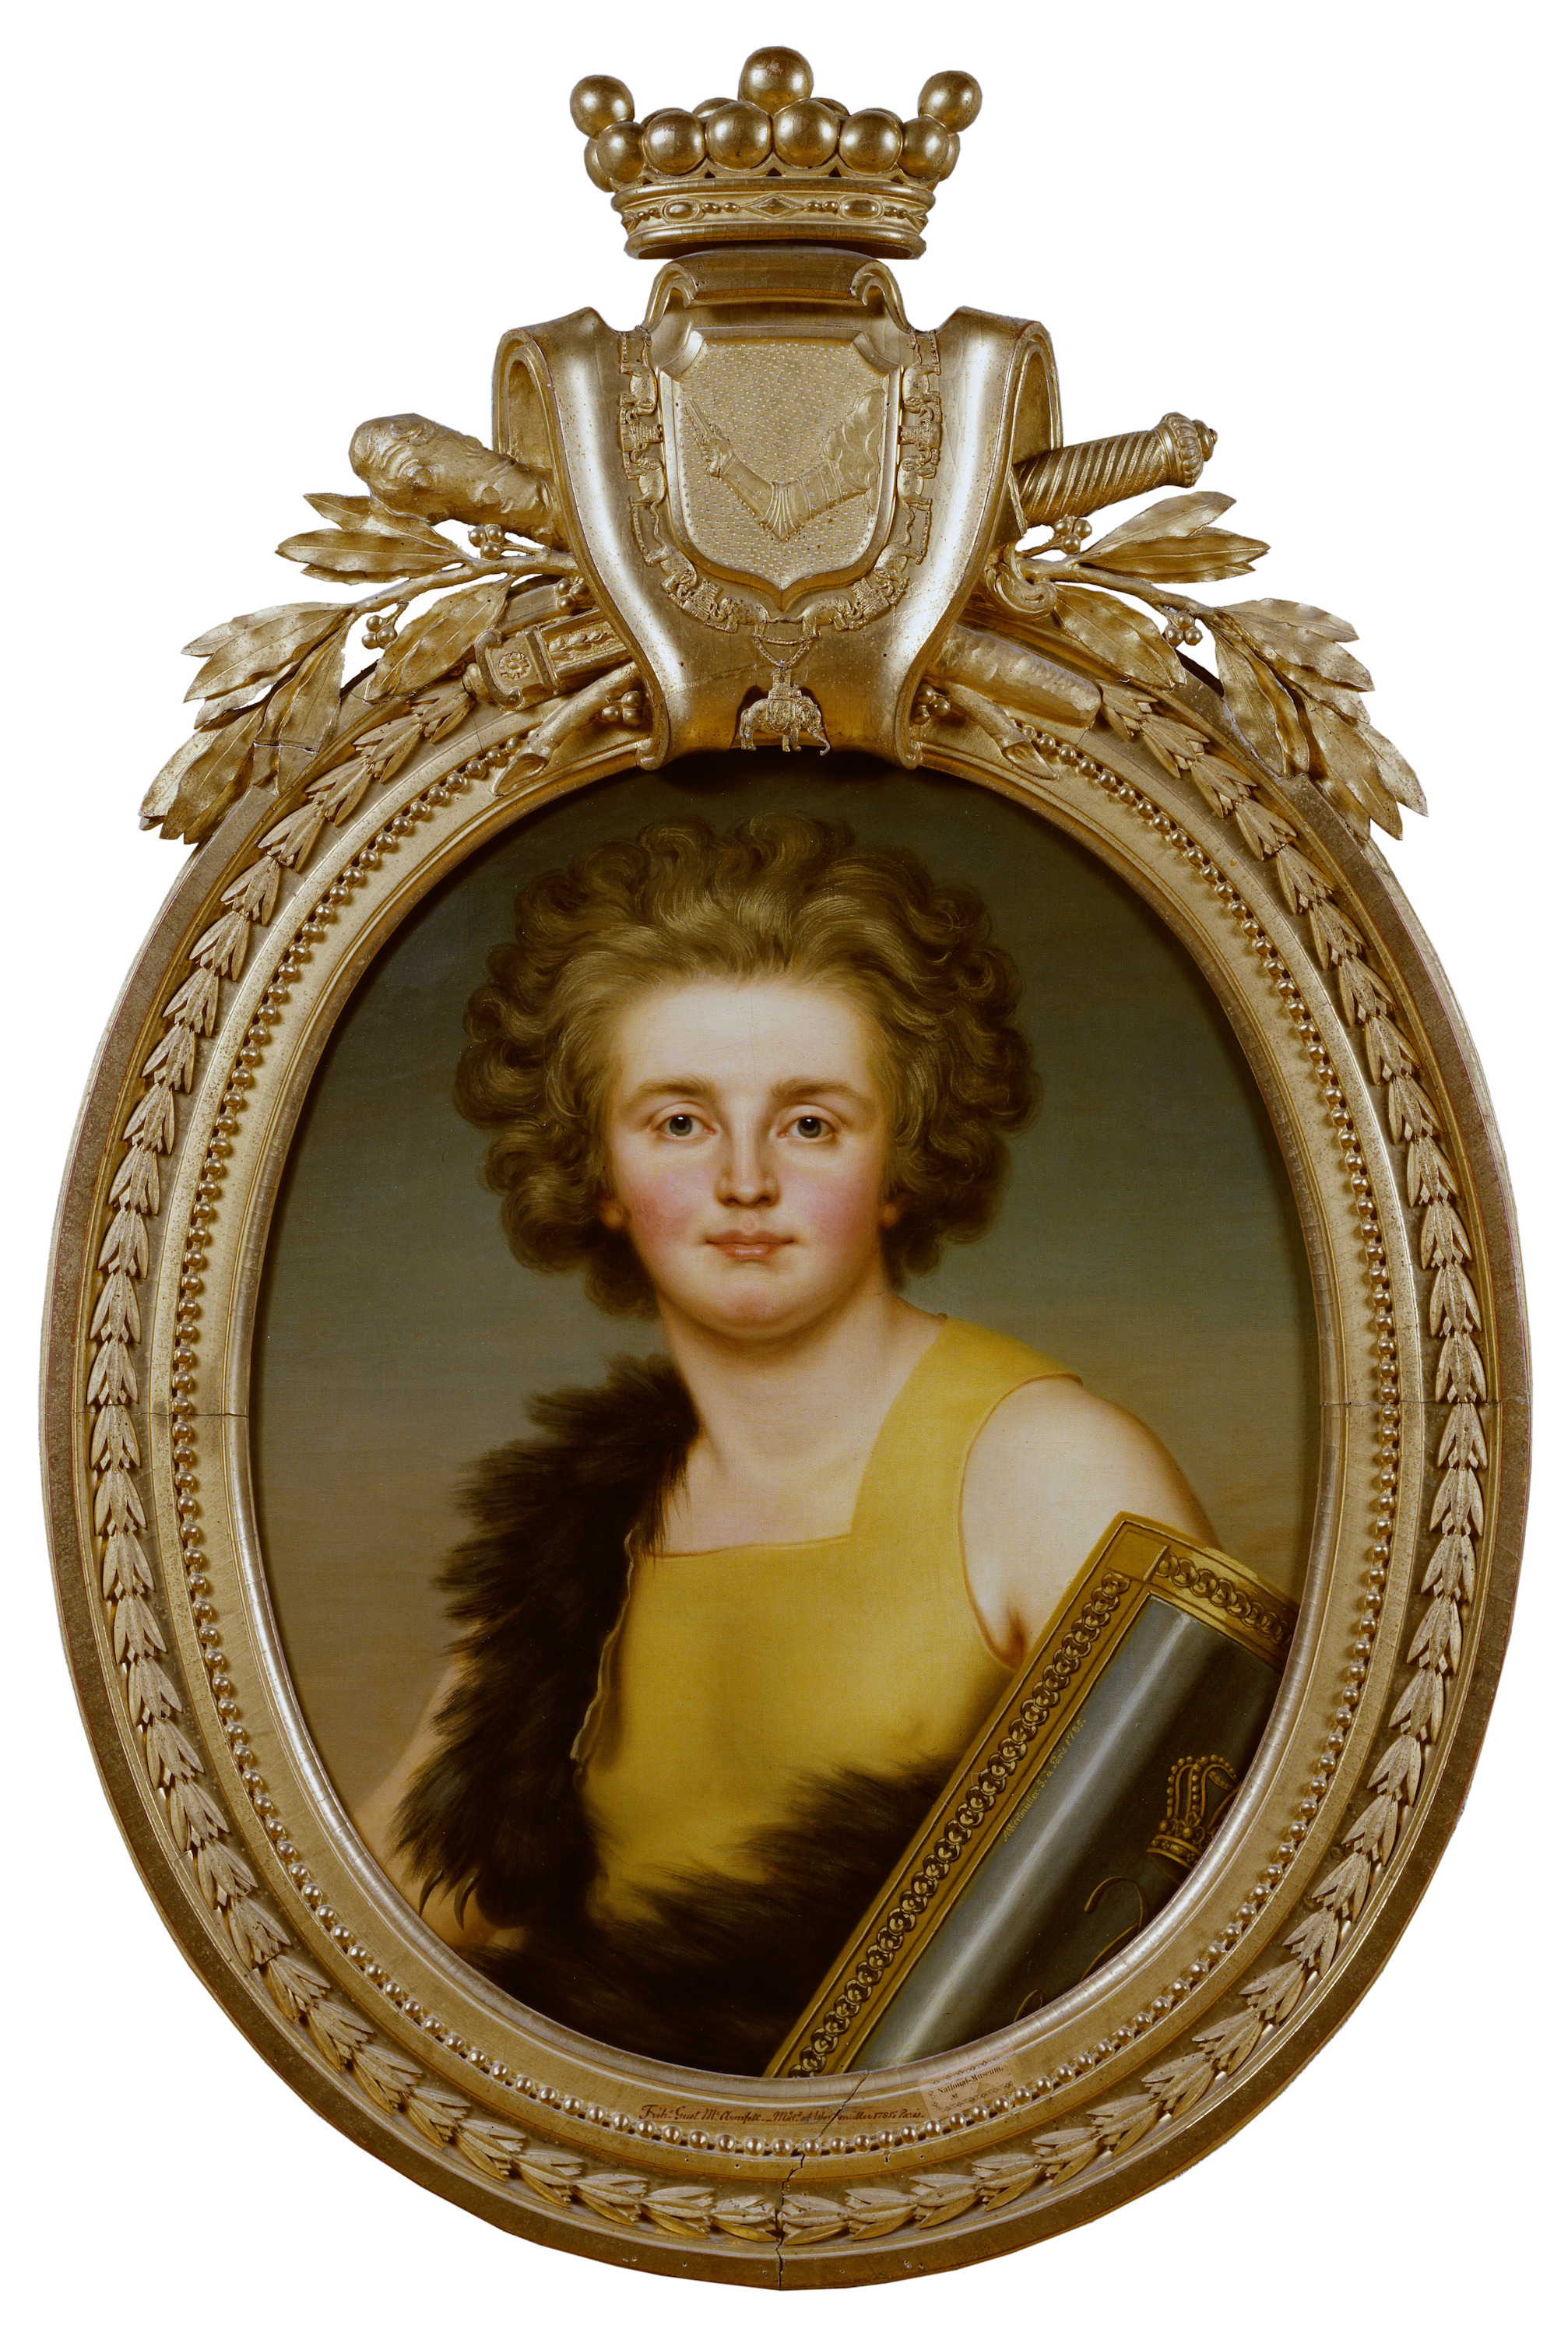 Gustaf Mauritz Armfelt by Adolf Ulrik Wertmüller - Podepsáno roku 1785 - 73 x 58,5 cm 